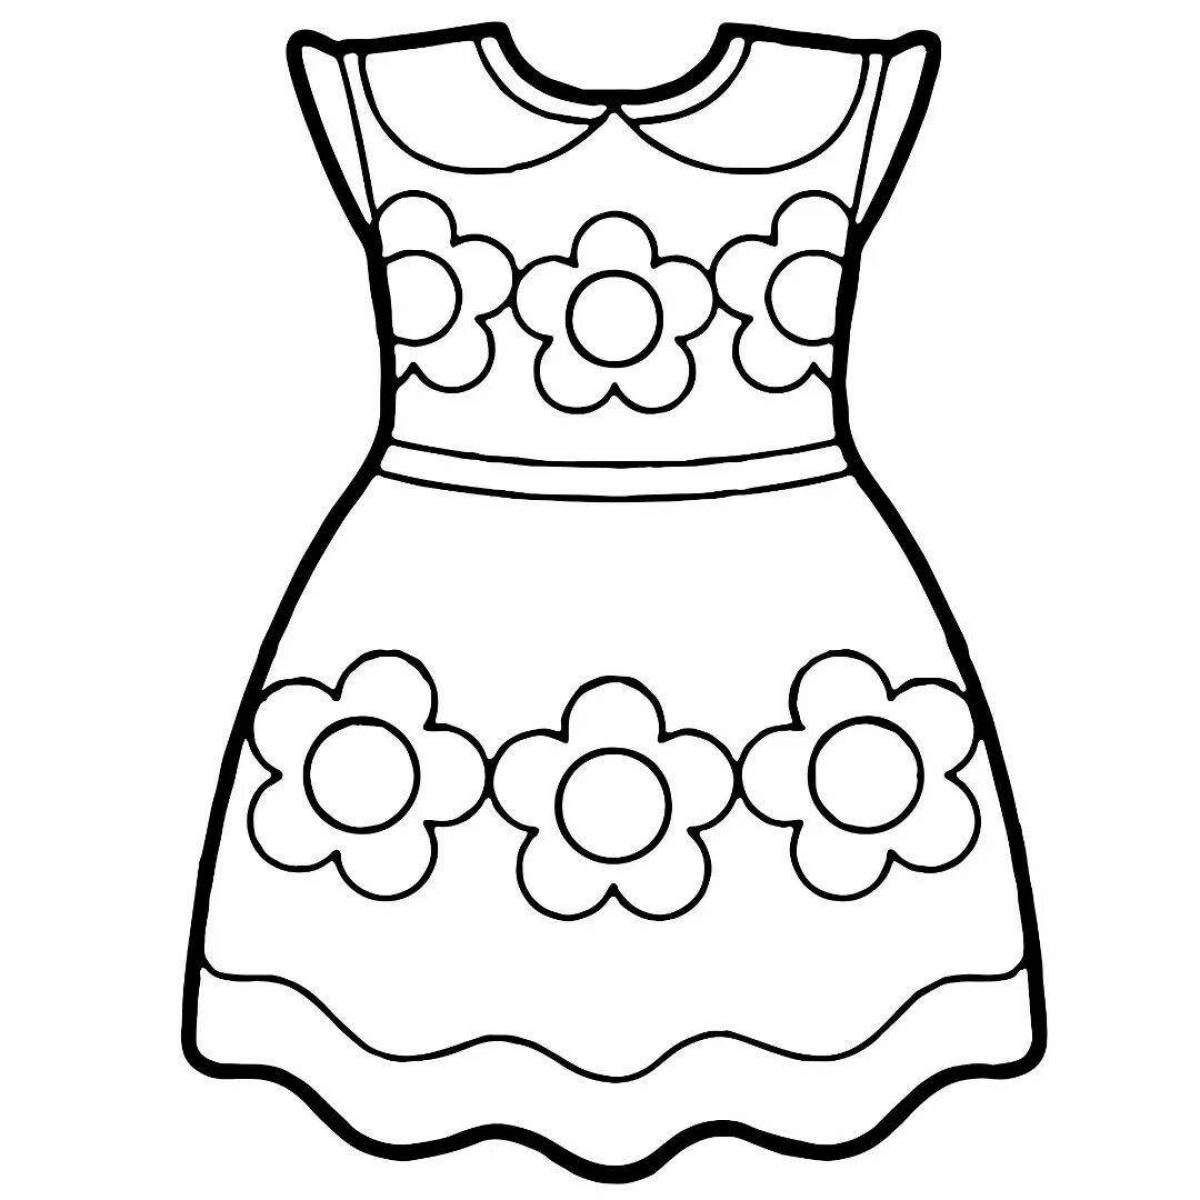 Fancy dress pattern coloring page